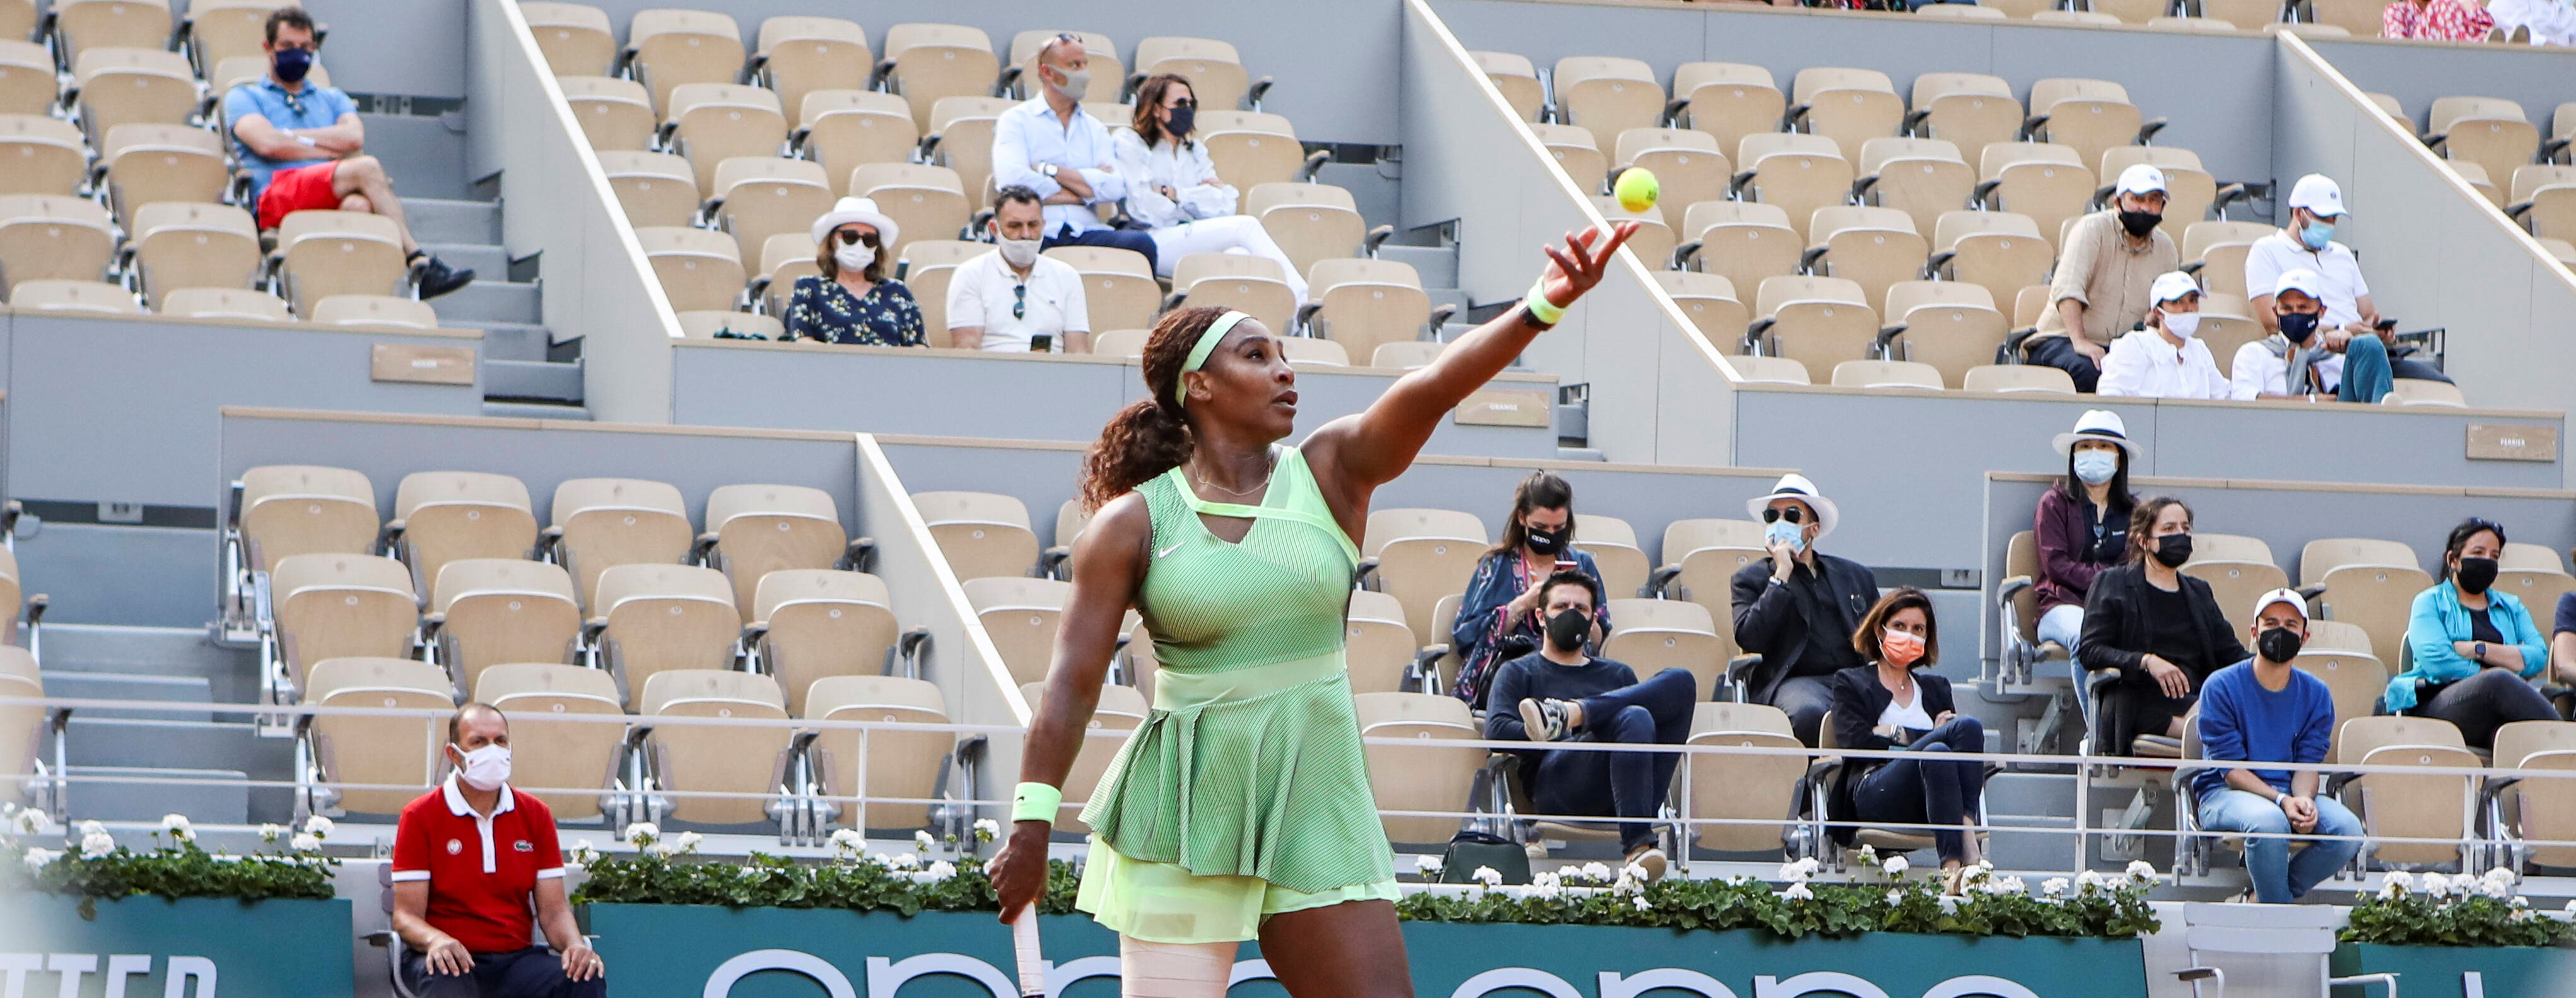 Serena Williams - Sports - The Shorty Awards